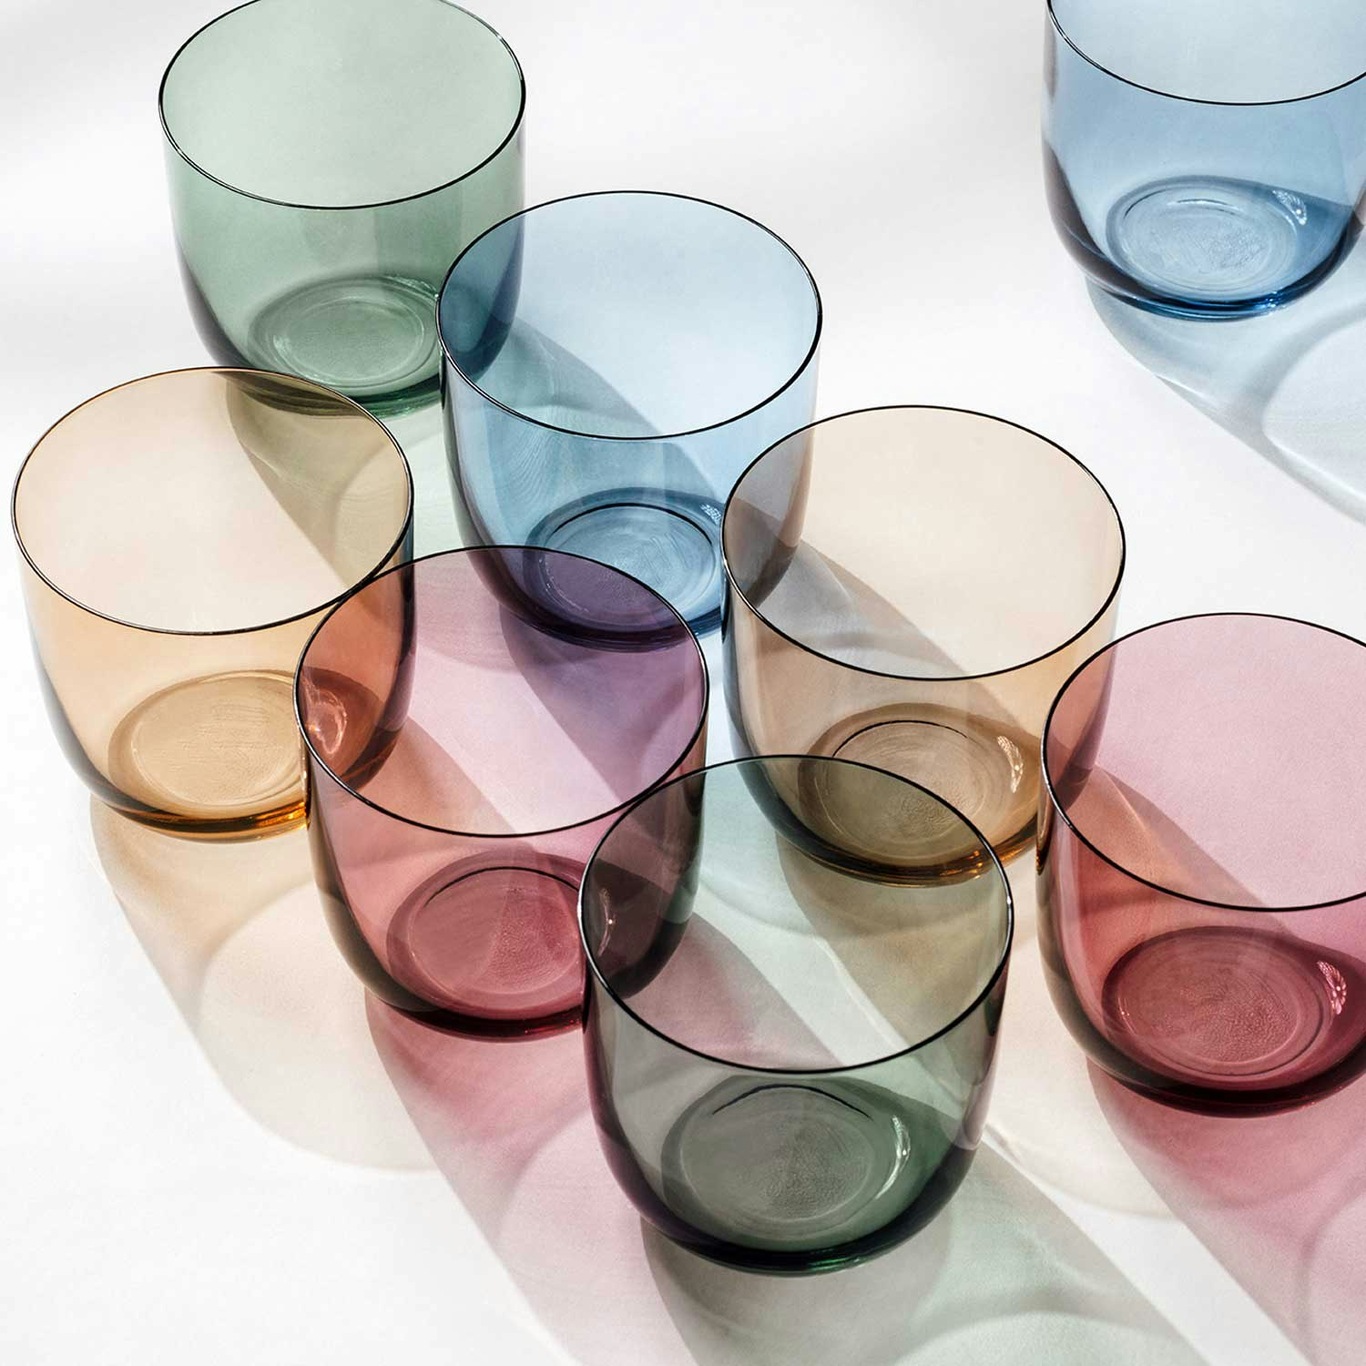 https://royaldesign.com/image/2/villeroy-boch-like-water-glasses-2-pack-27?w=800&quality=80